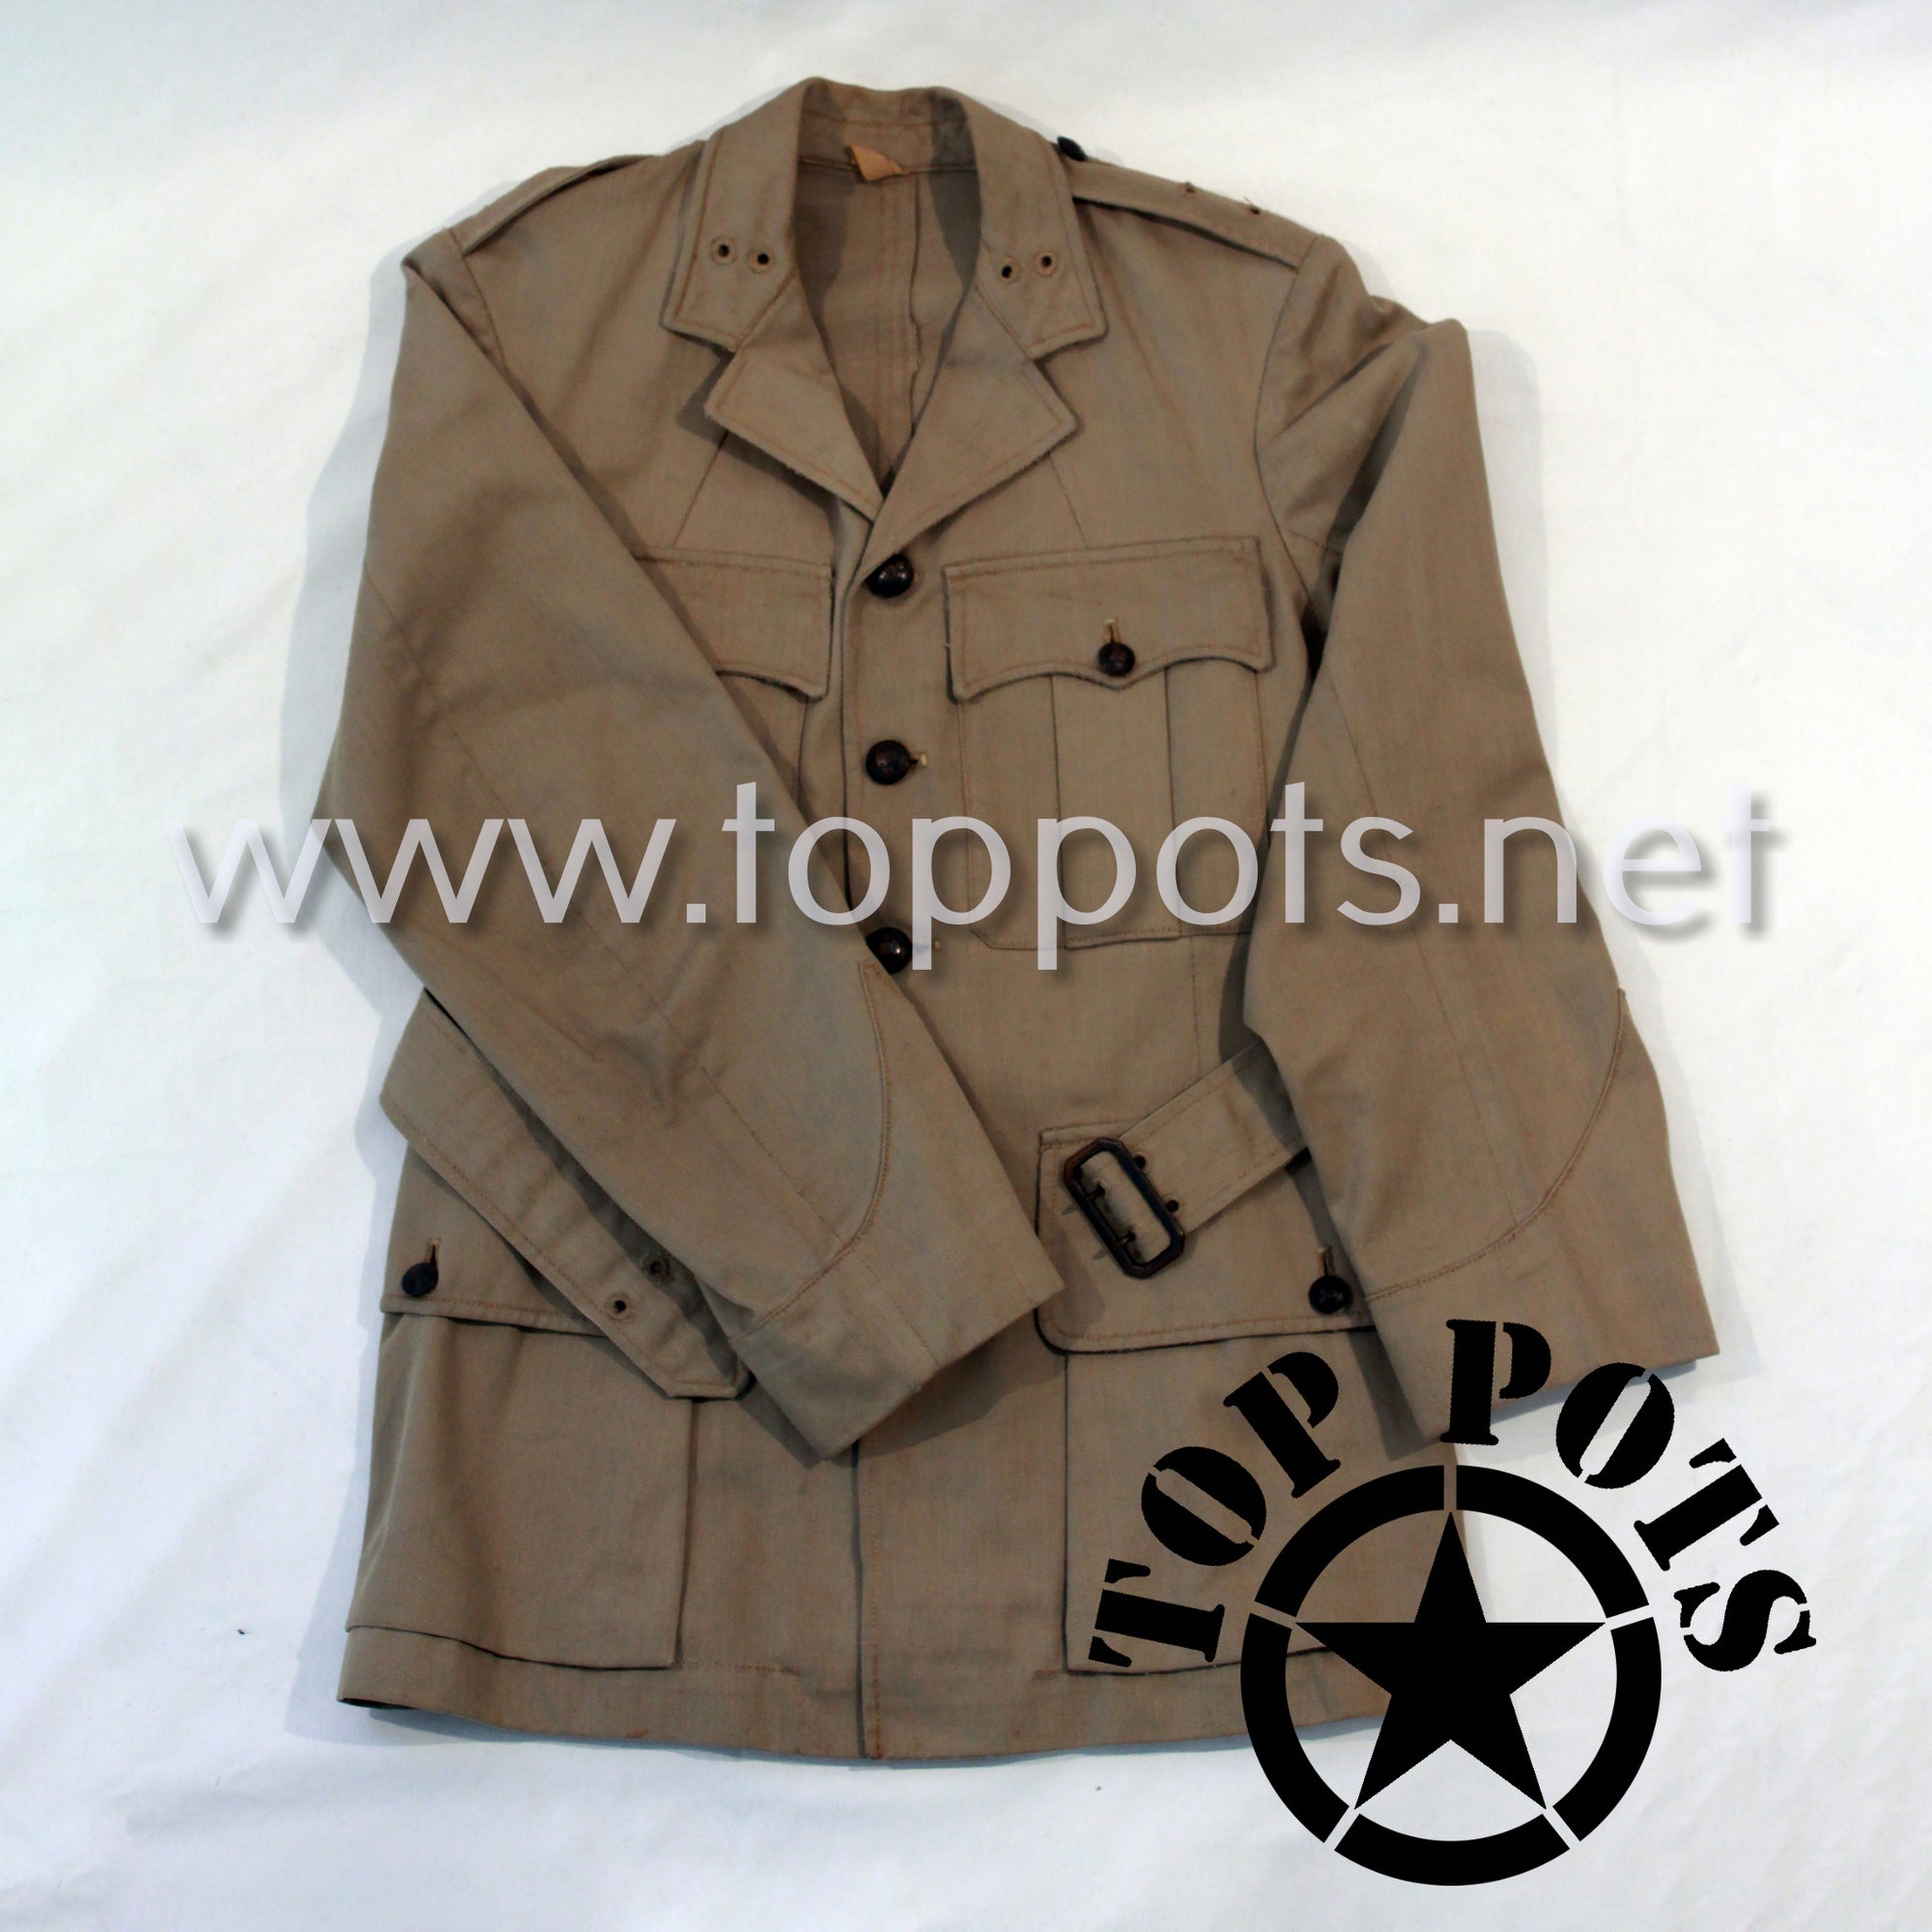 Featured Uniform - Original WWII ANZAC Australian Army Second Australian Imperial Force Officer Uniform Officer Bush Jacket Khaki Cotton (Jacket Only)